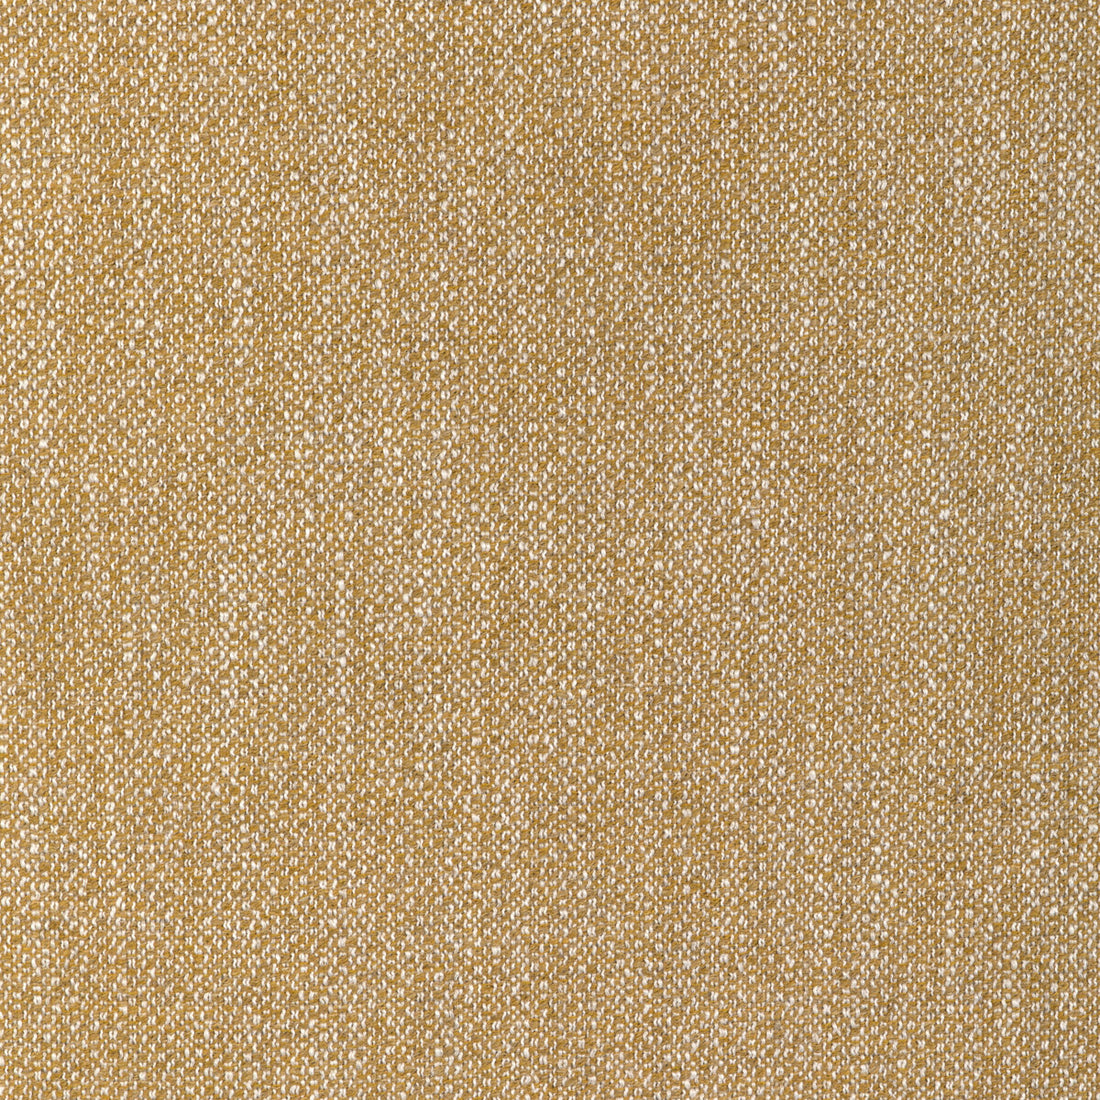 Torus fabric in glow color - pattern GWF-3793.416.0 - by Lee Jofa Modern in the Kelly Wearstler VIII collection